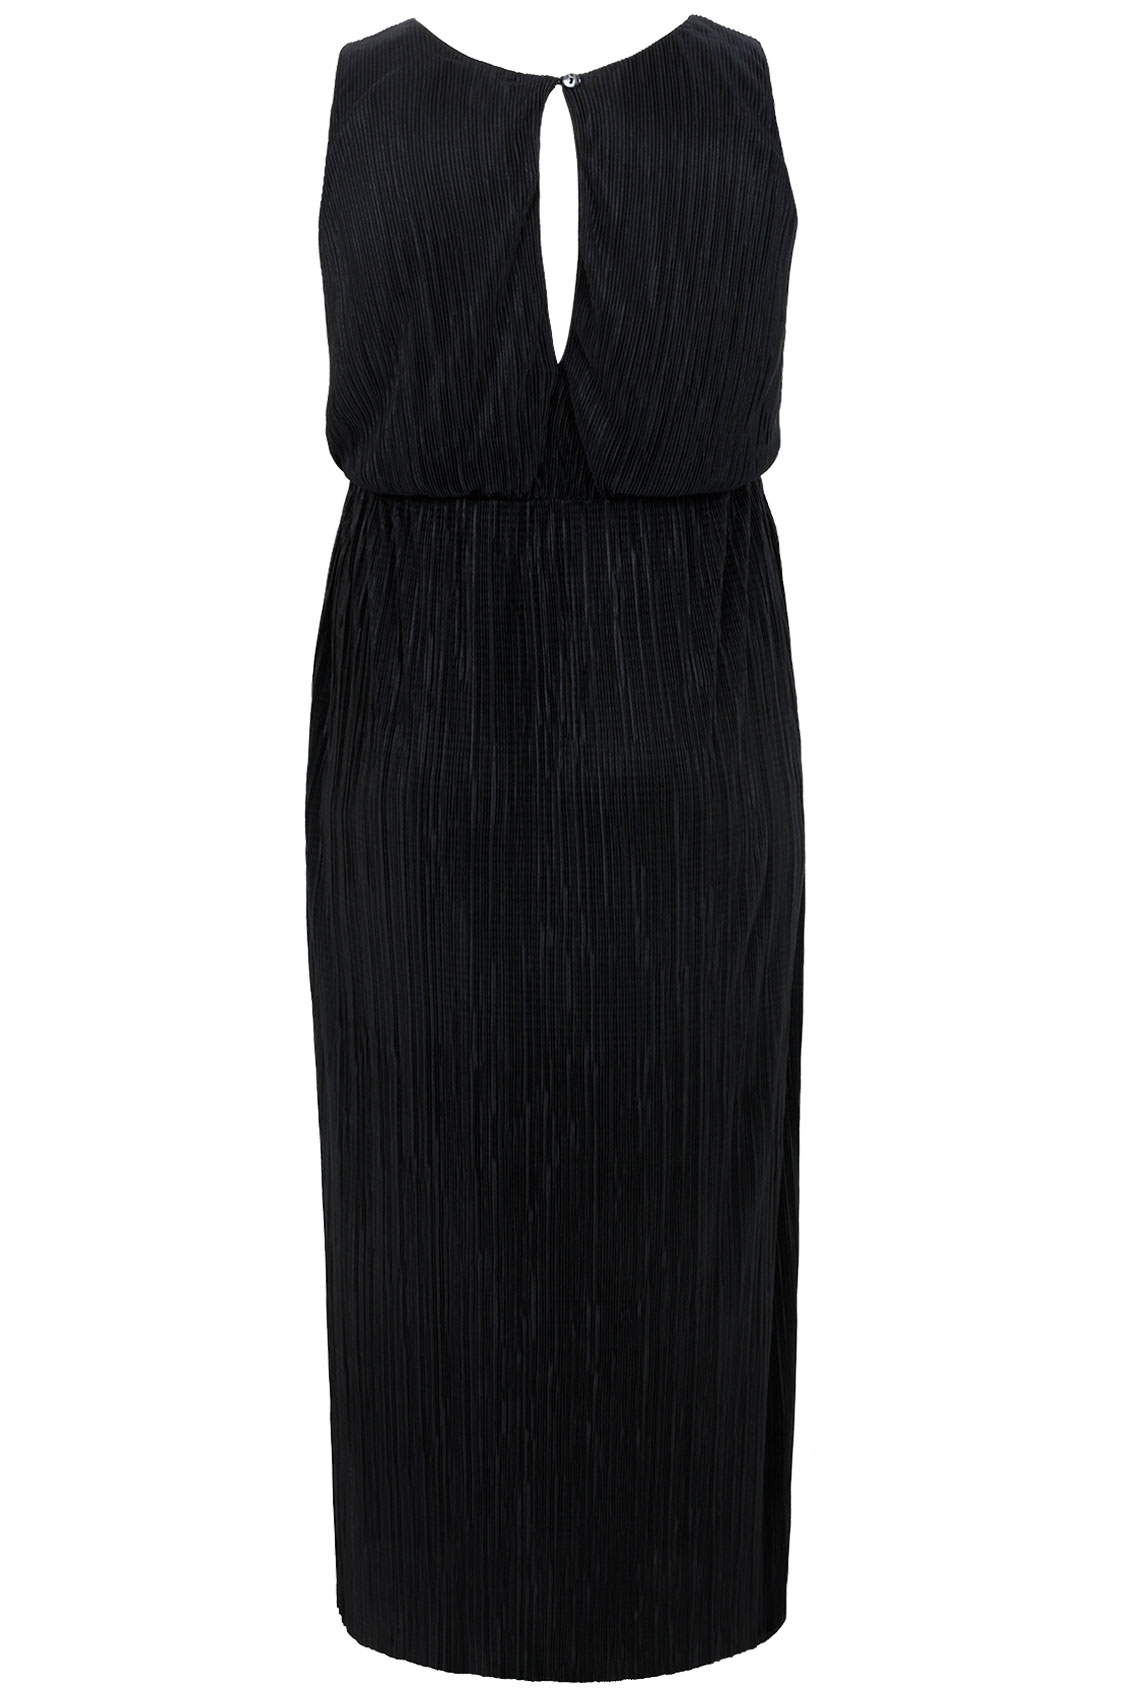 Black Crinkle Pleat Sleeveless Maxi Dress Plus Size 14 to 28